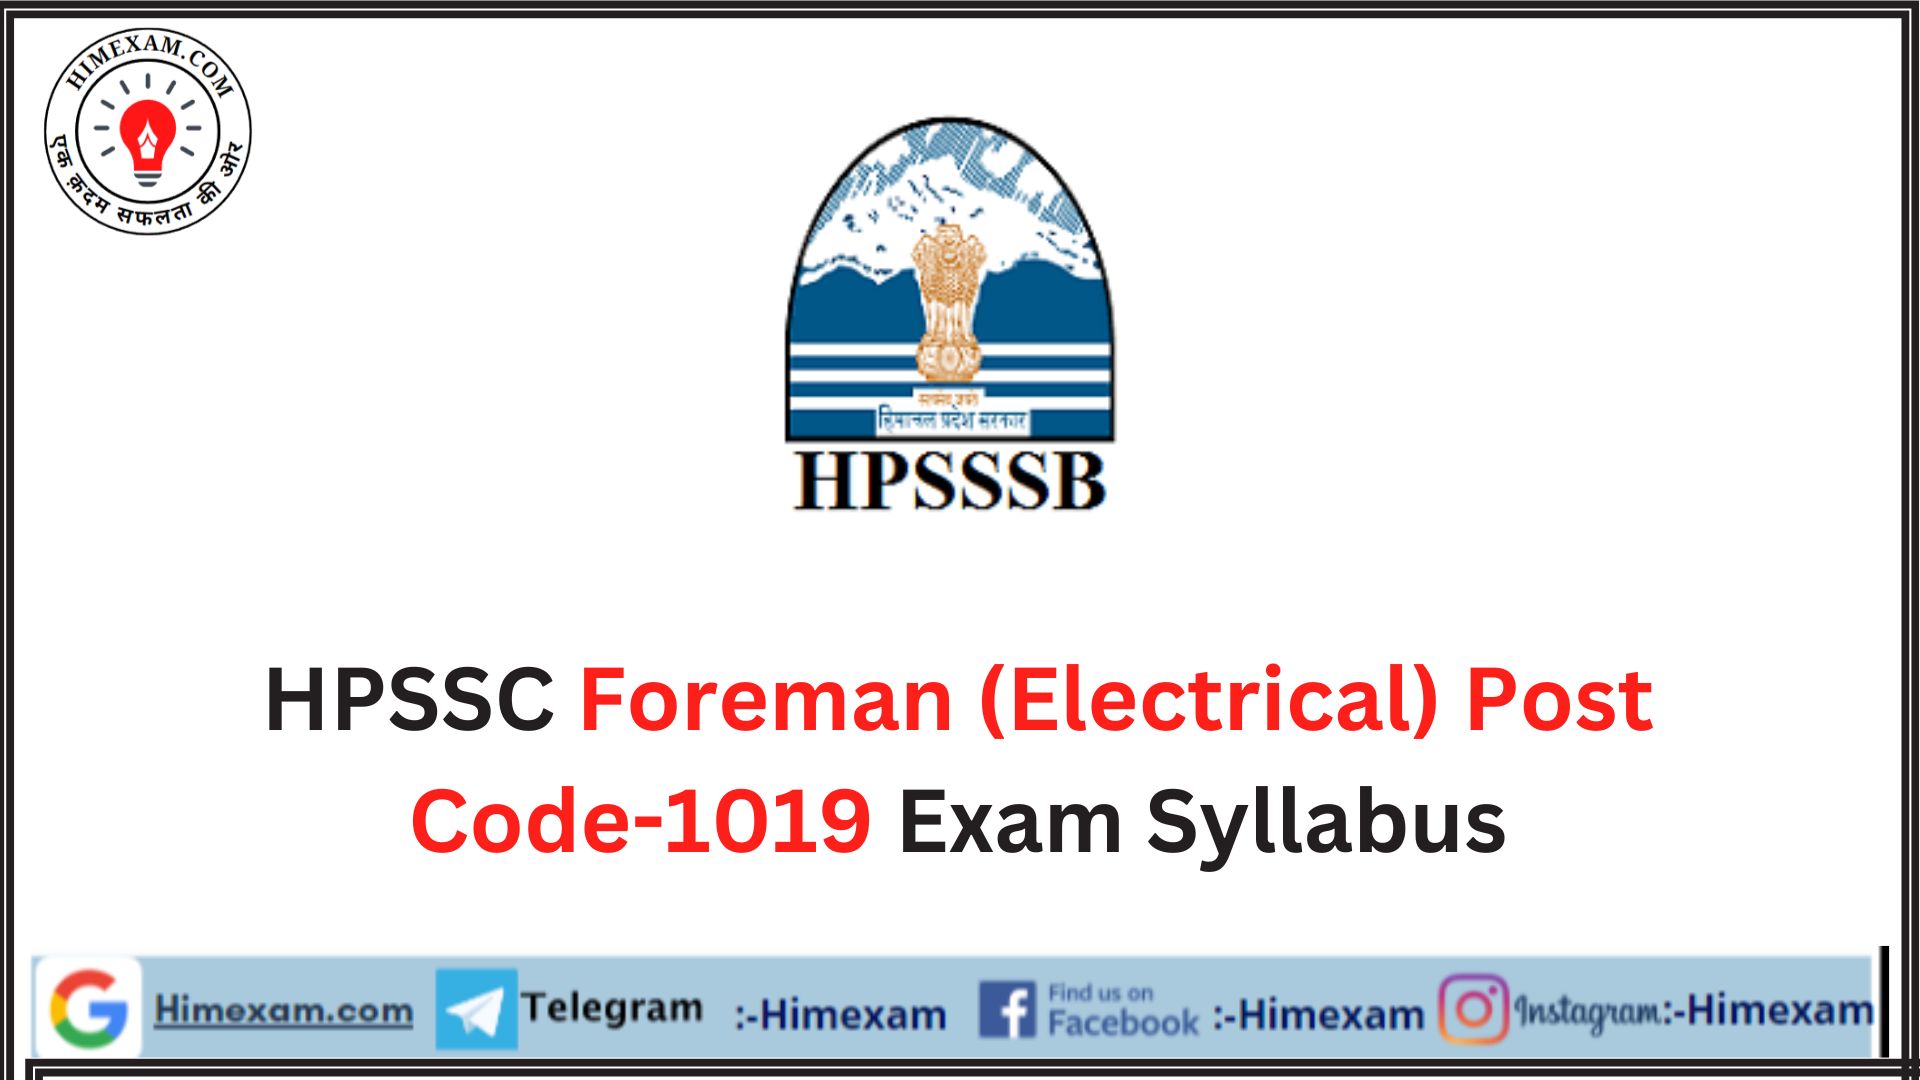 HPSSC Foreman (Electrical) Post Code-1019 Exam Syllabus